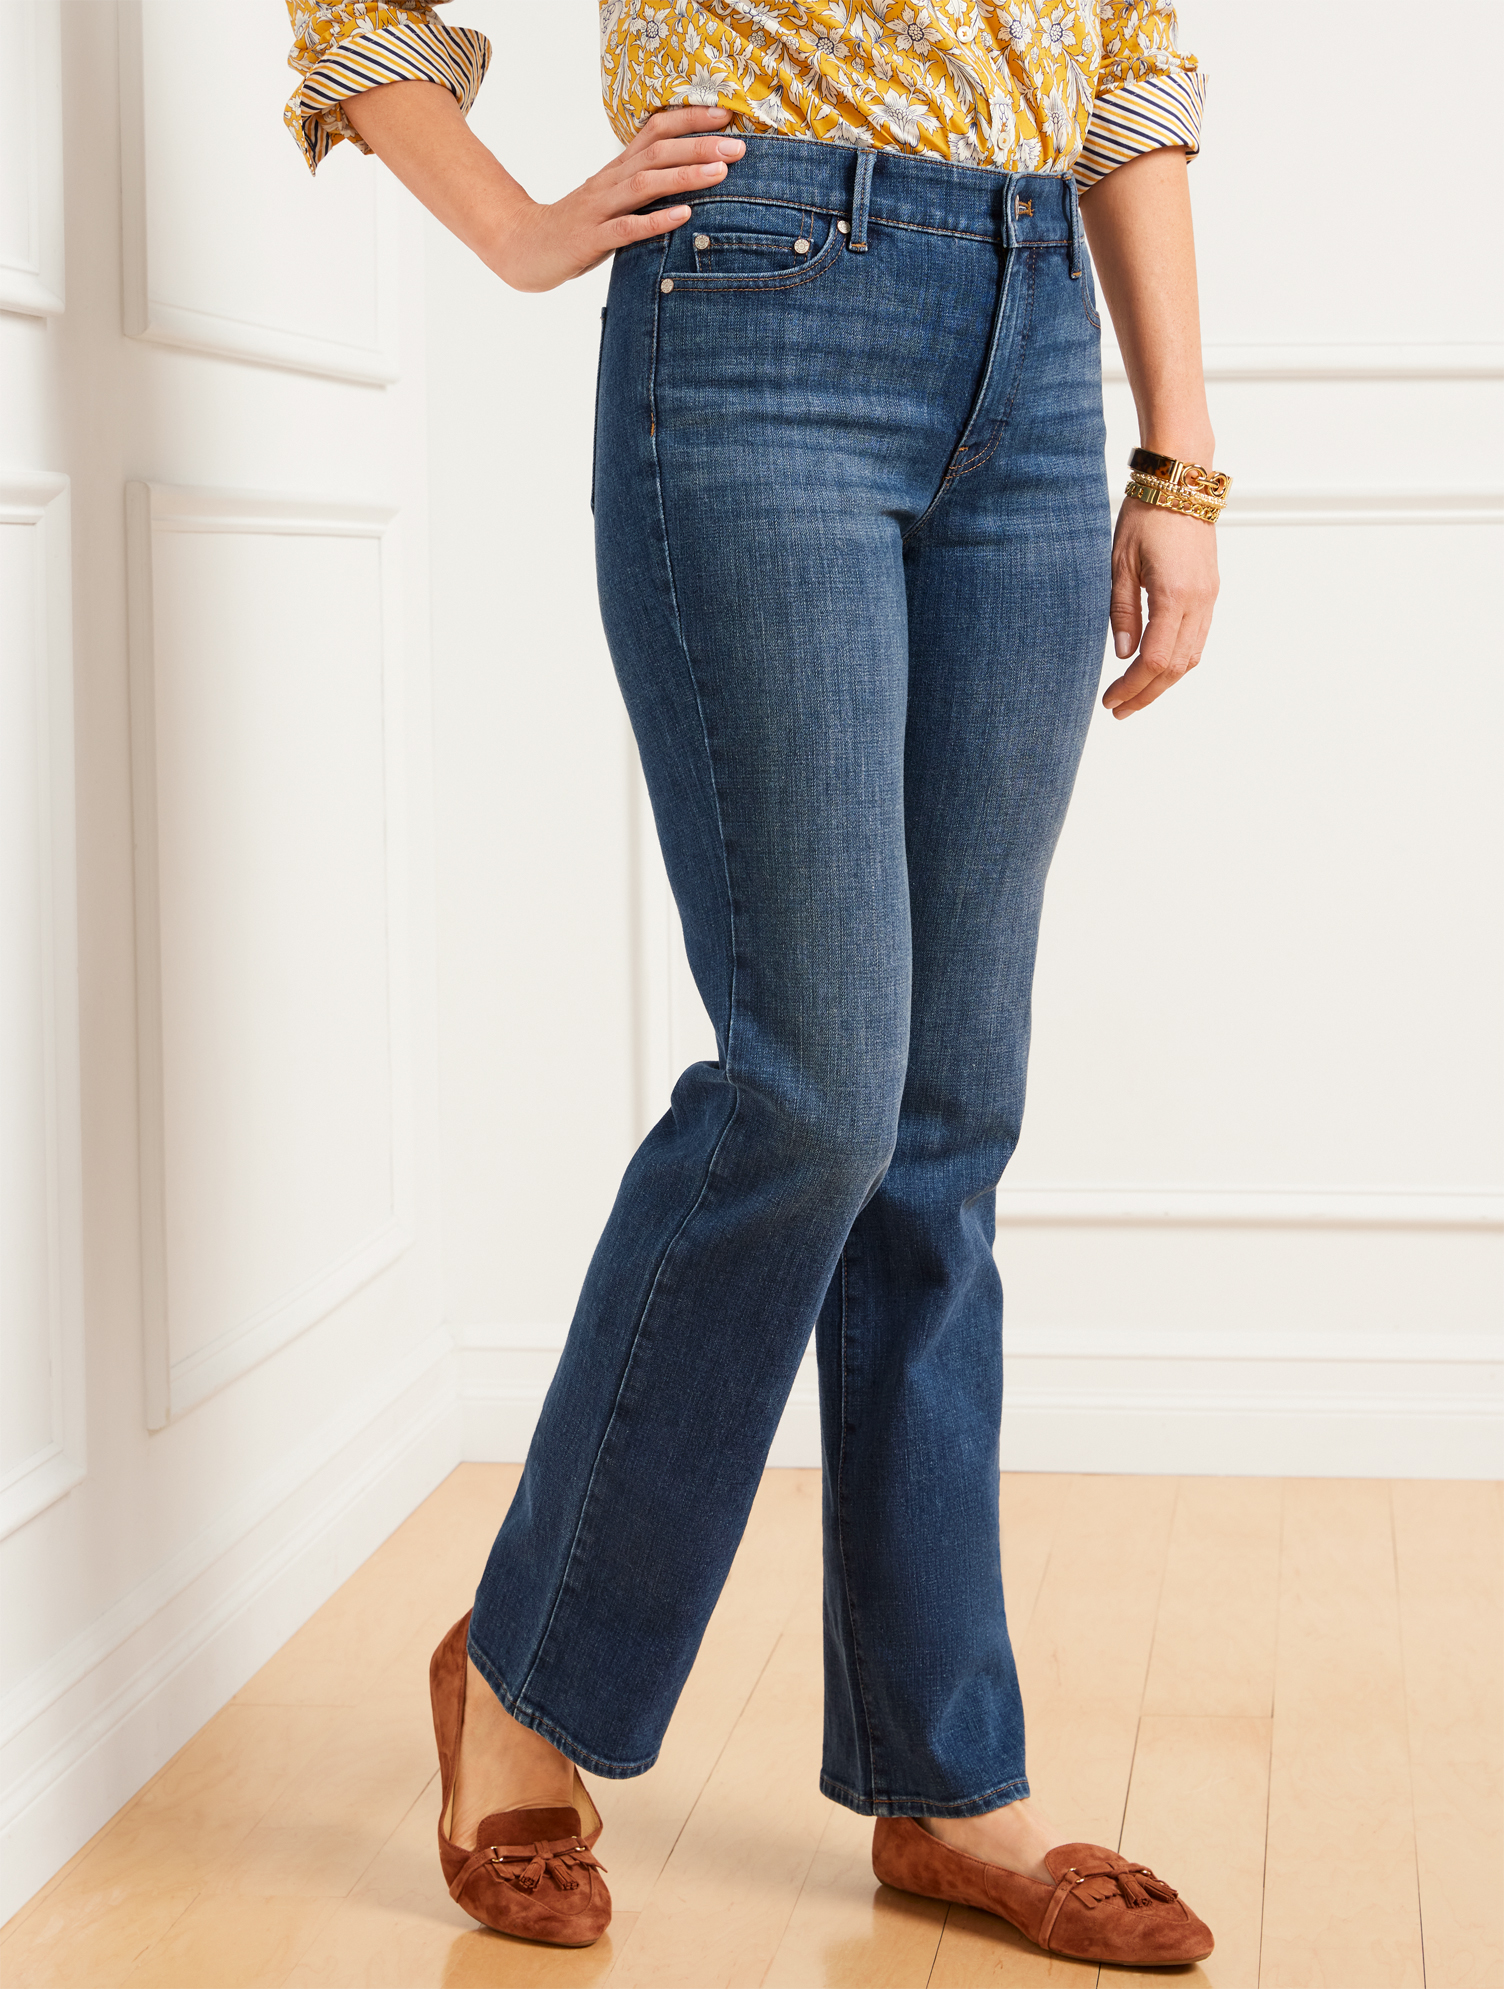 Talbots Plus Size - Plus Exclusive Barely Boot Jeans - Savannah Wash - Curvy Fit - 22